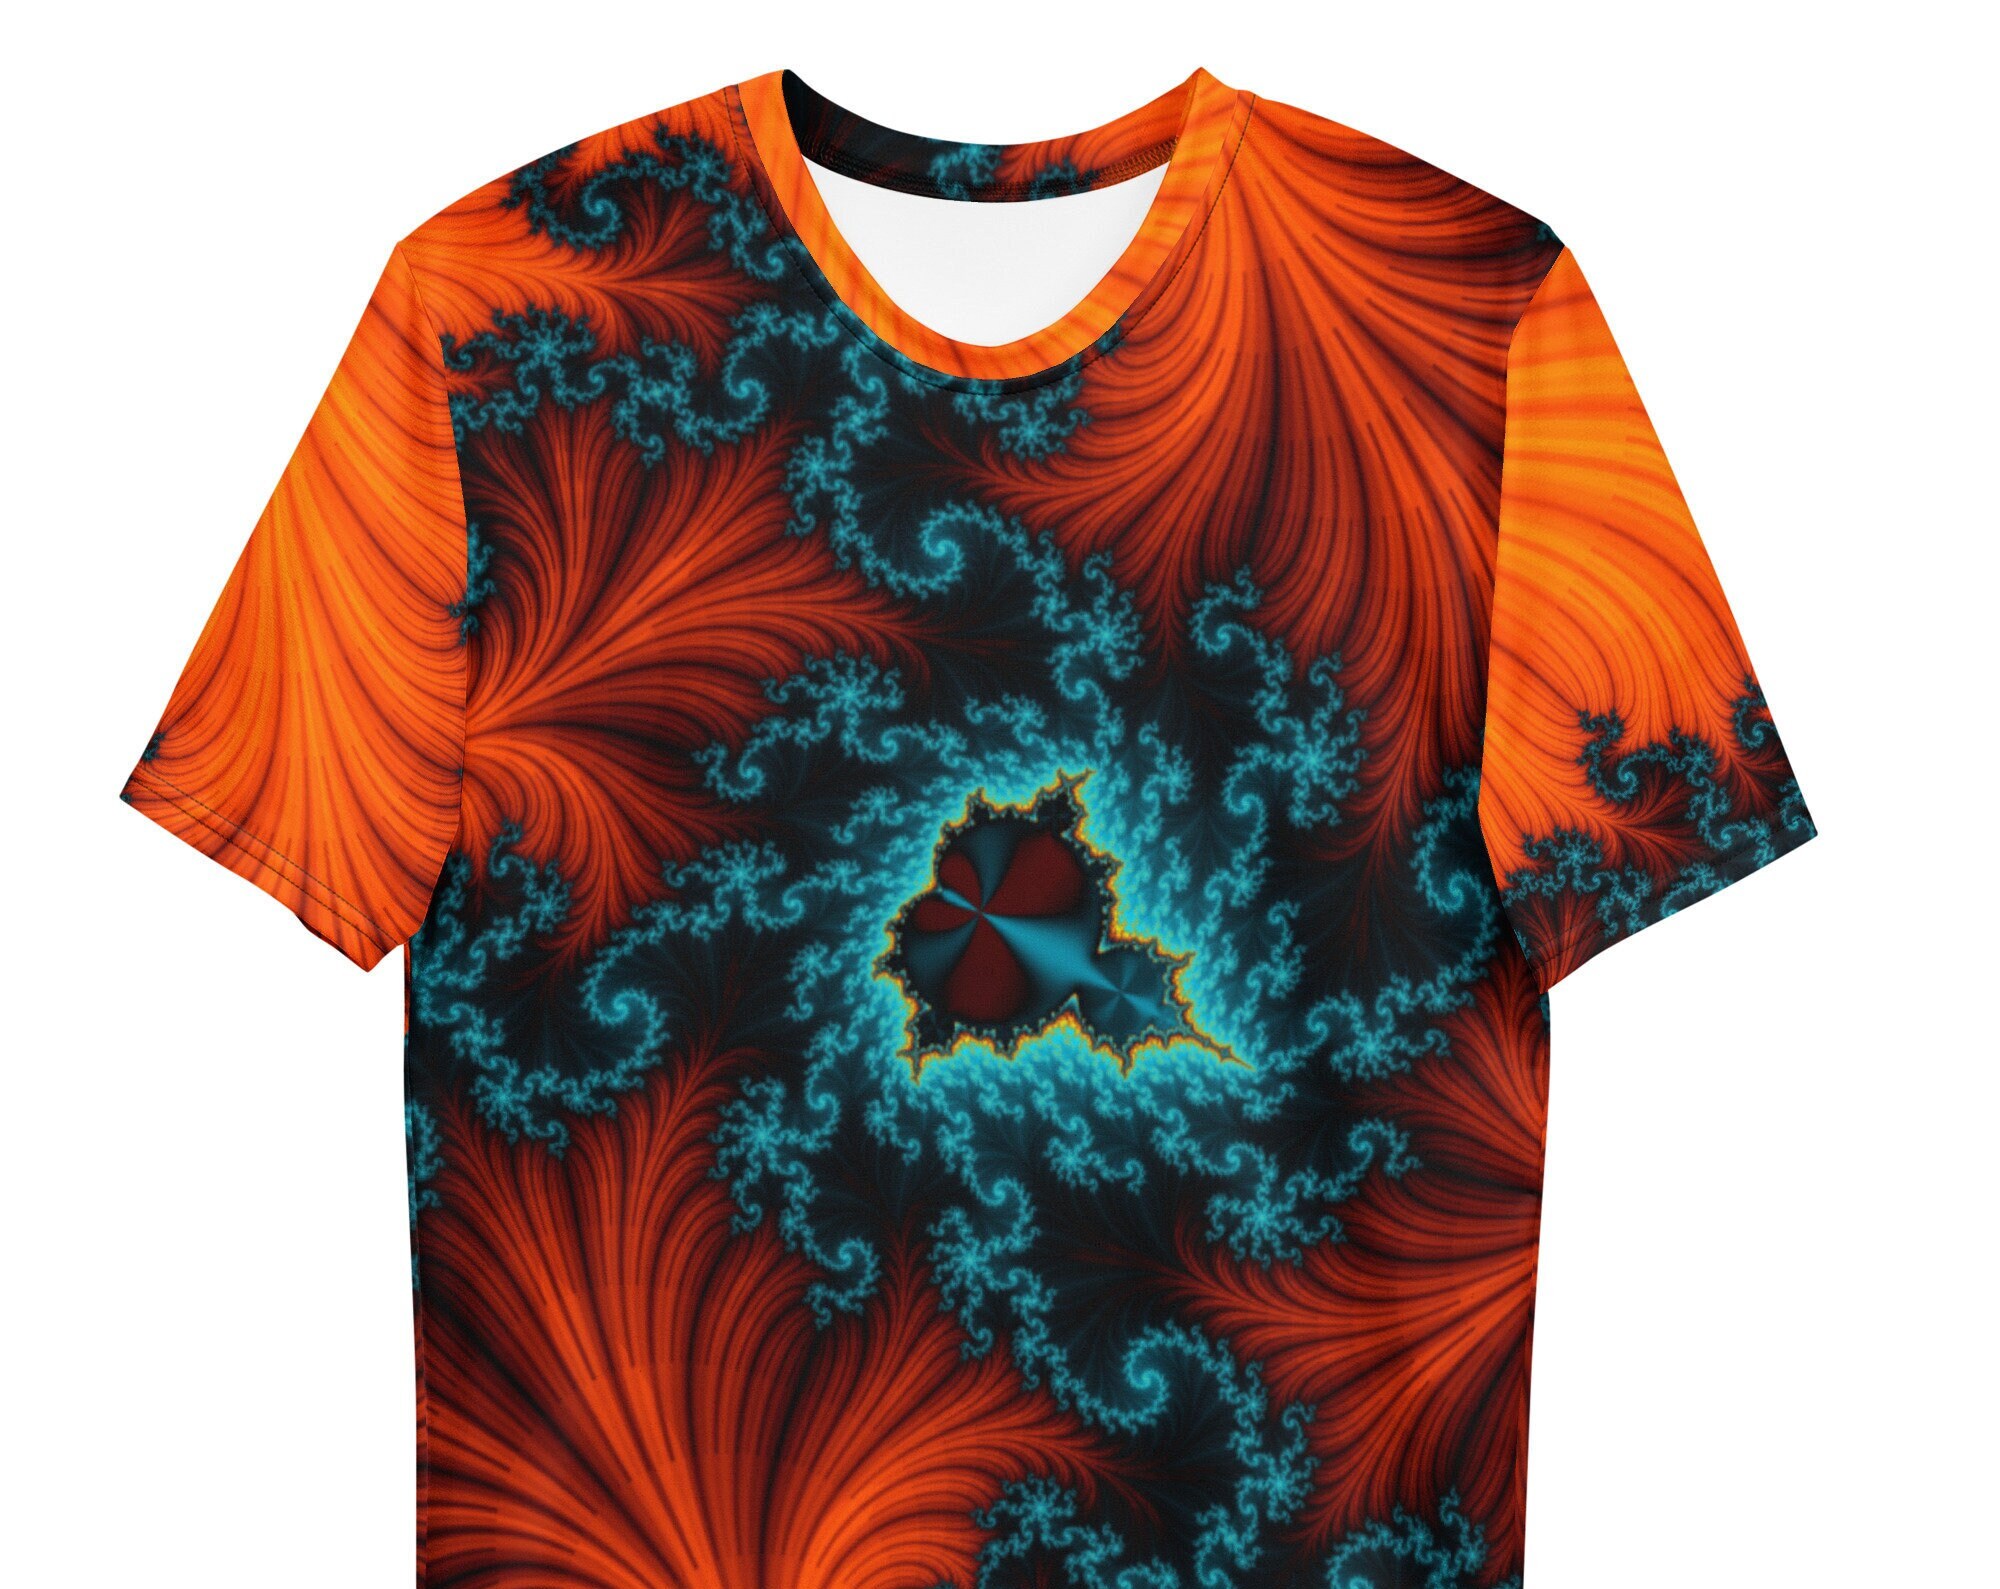 3D Shirt - Orange Mandelbro Fractal